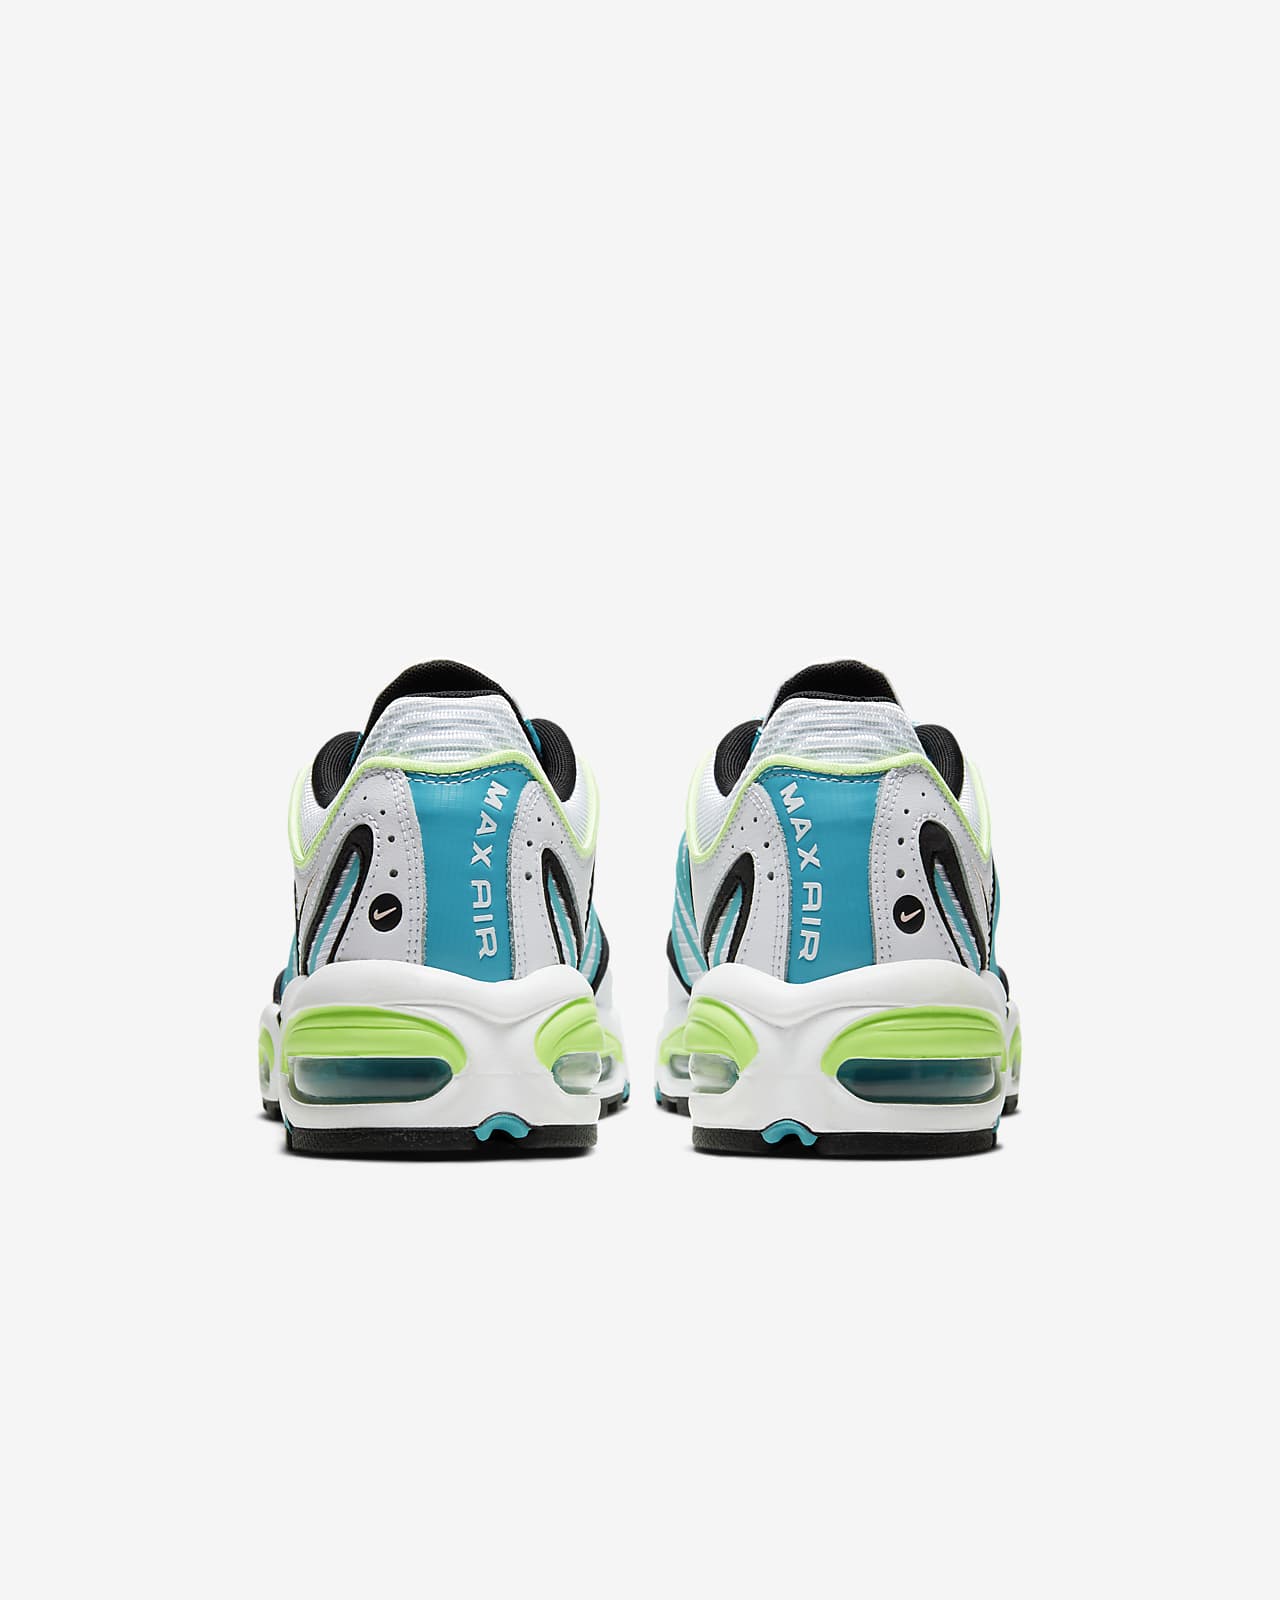 Nike Air Max Tailwind IV SE Men's Shoe 